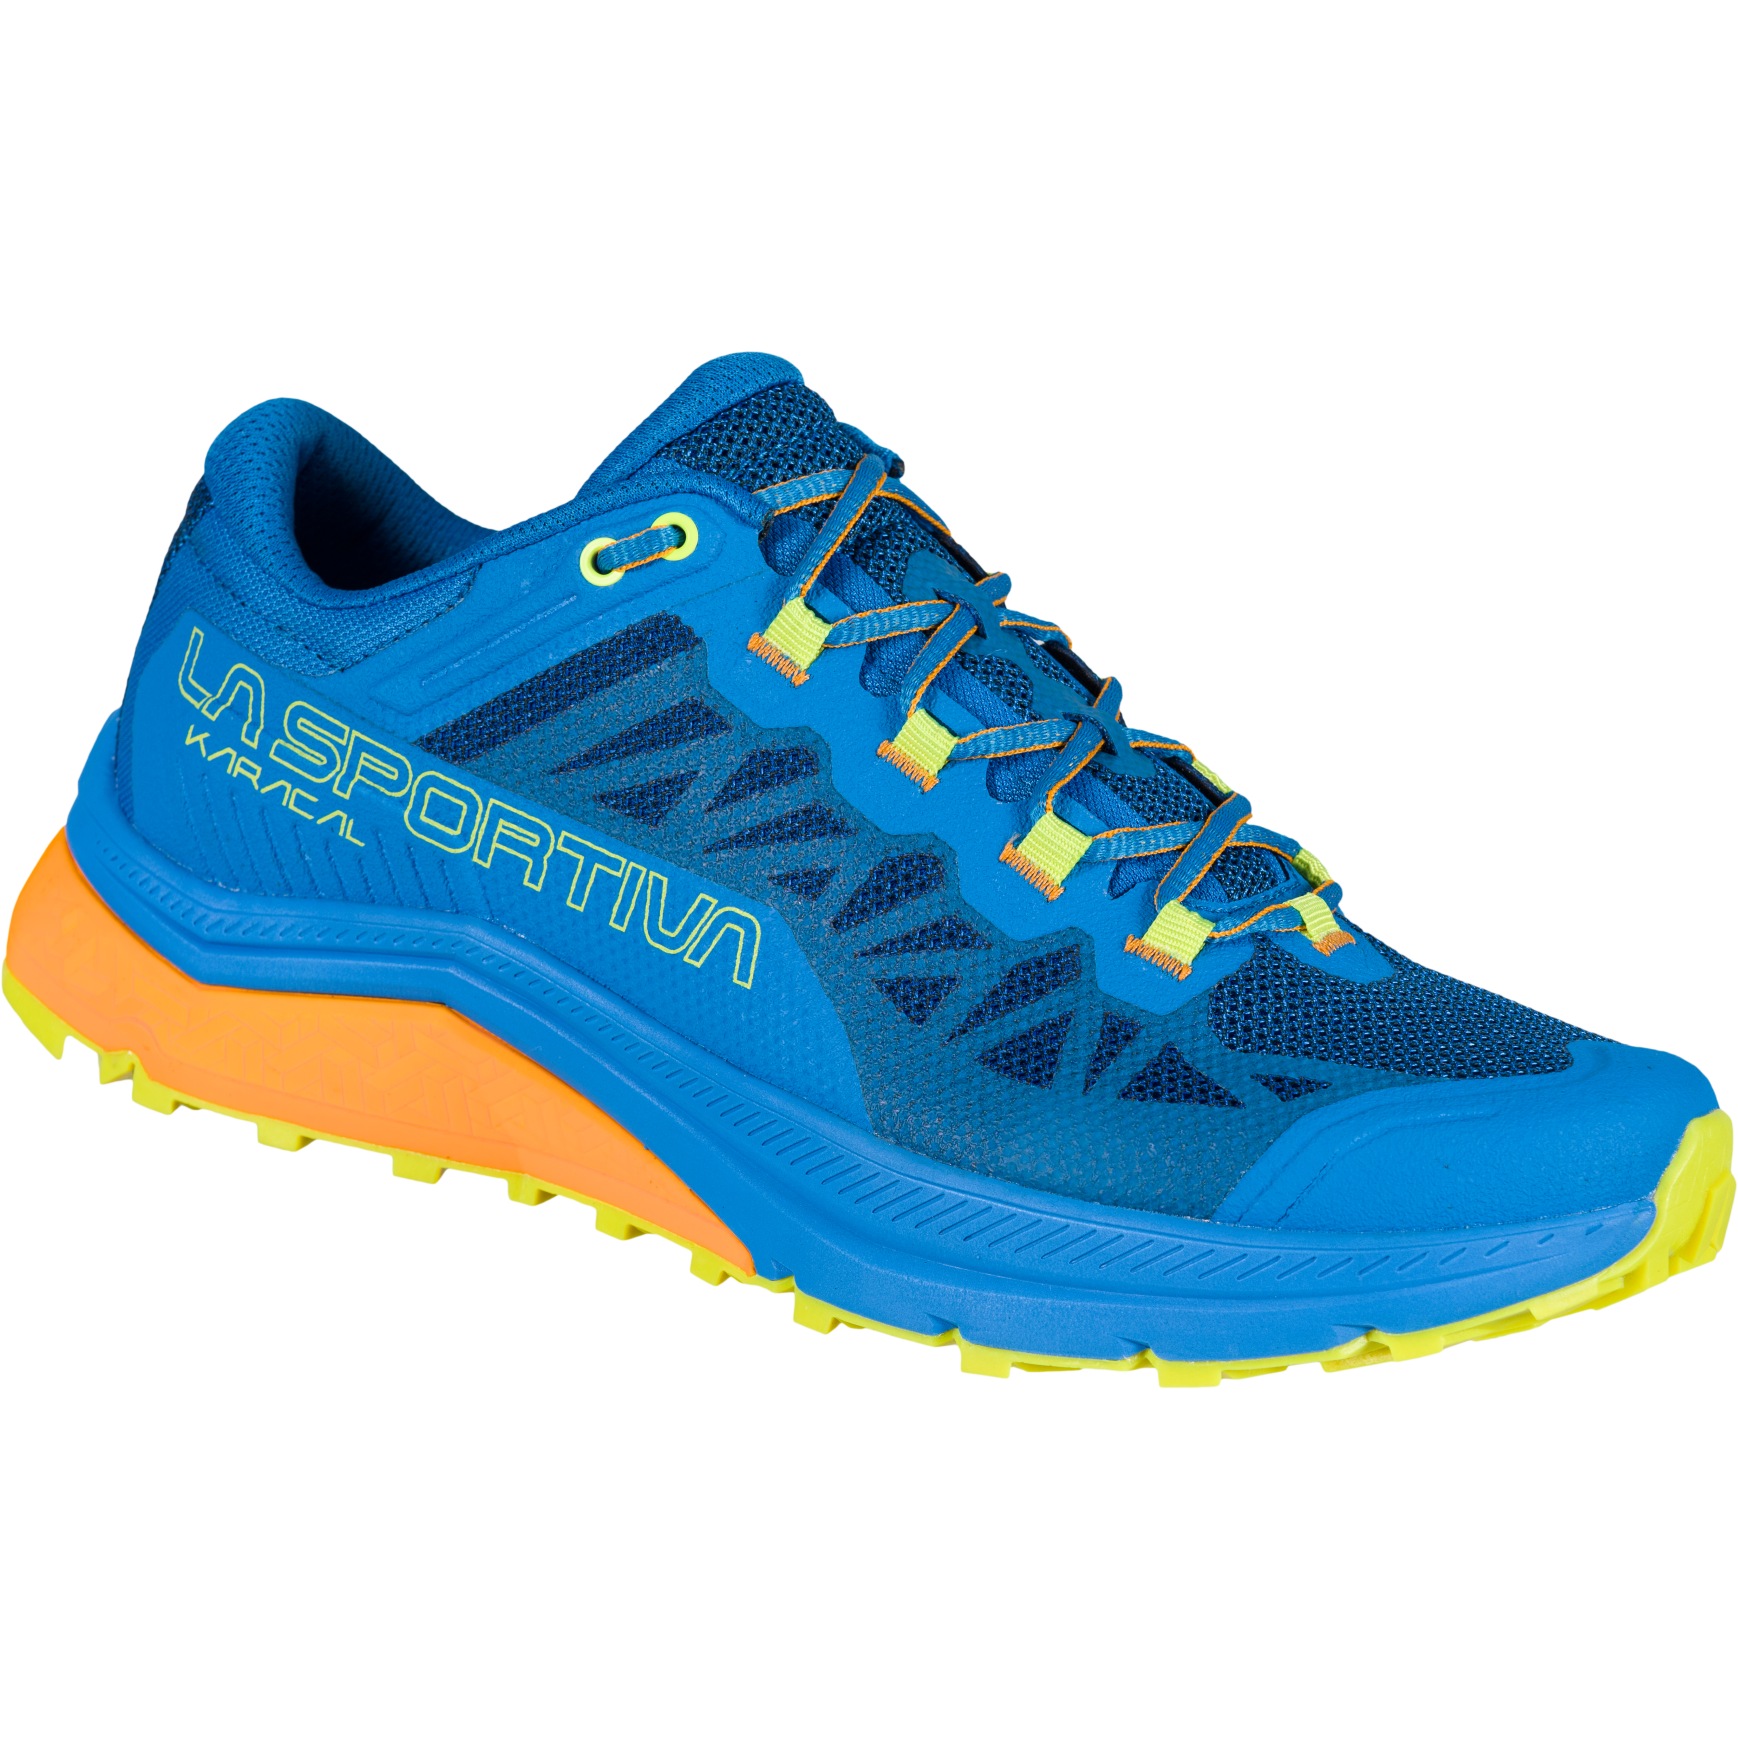 Image of La Sportiva Karacal Running Shoes - Electric Blue/Citrus